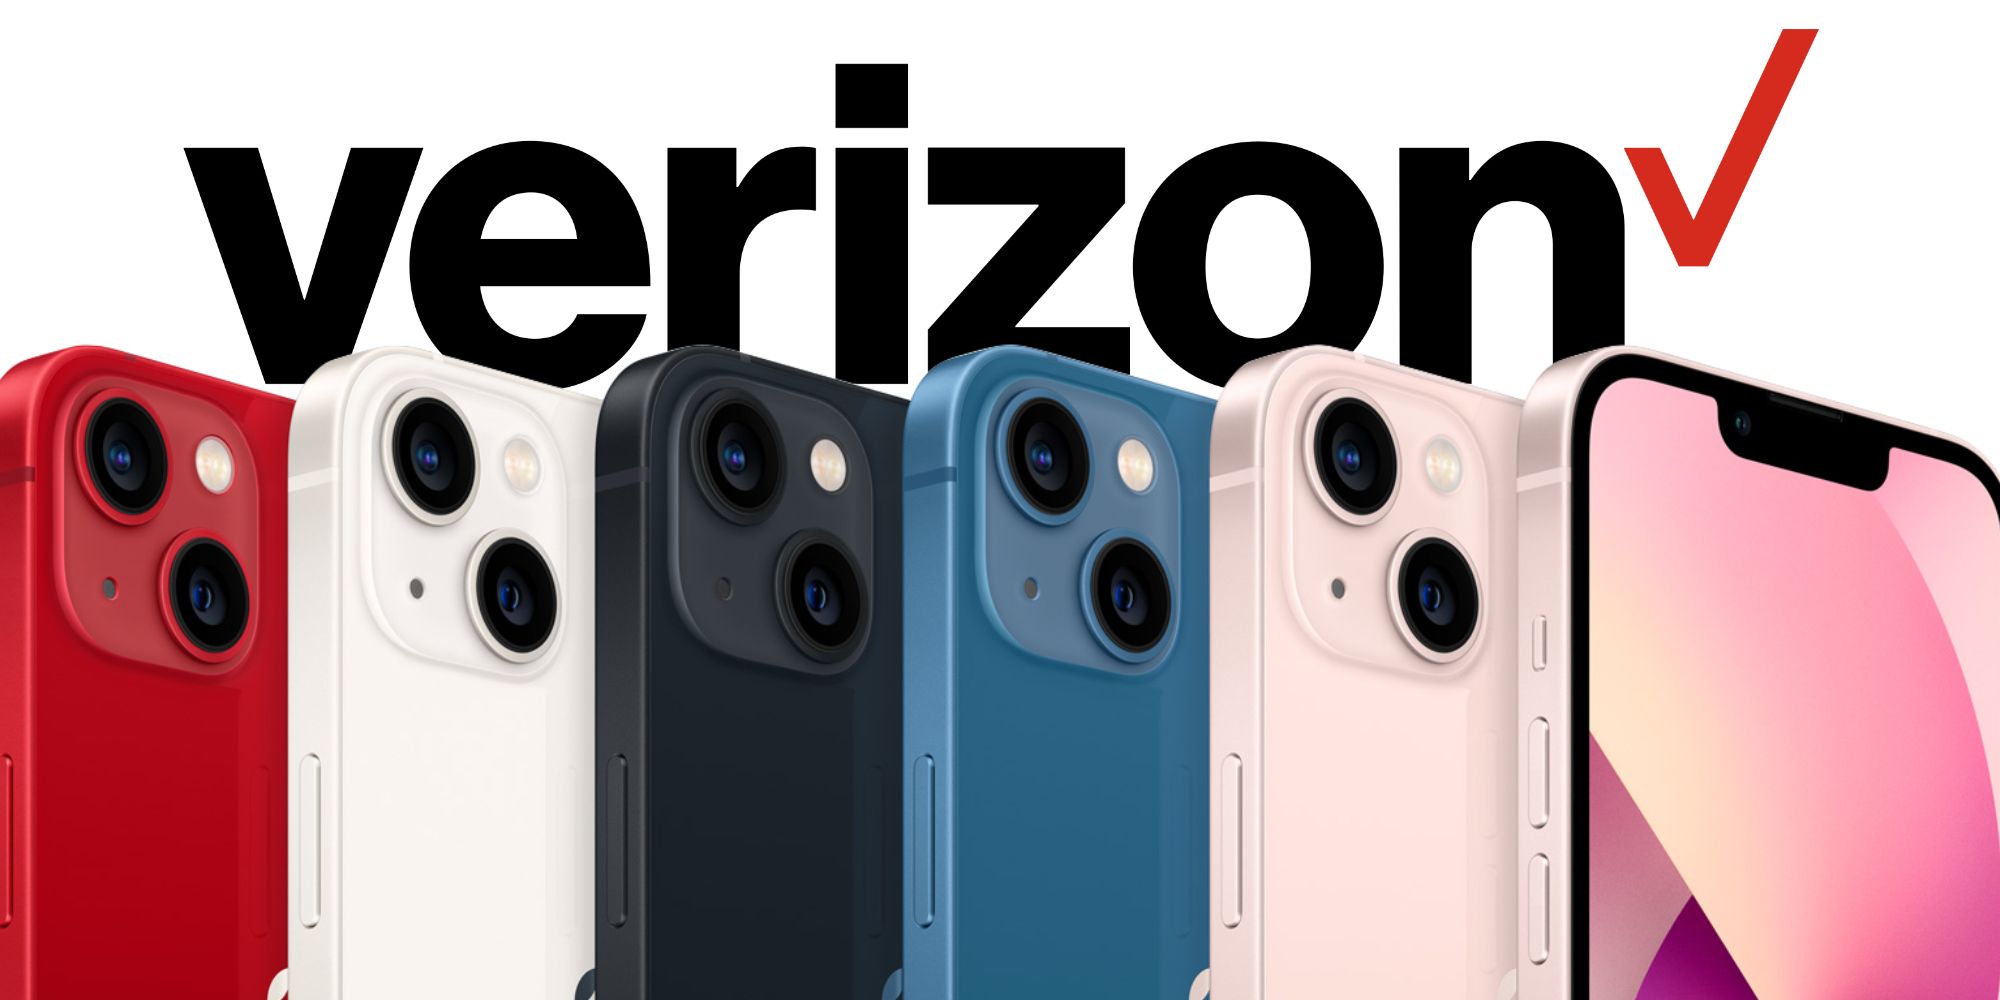 iPhone 13 render with the Verizon logo